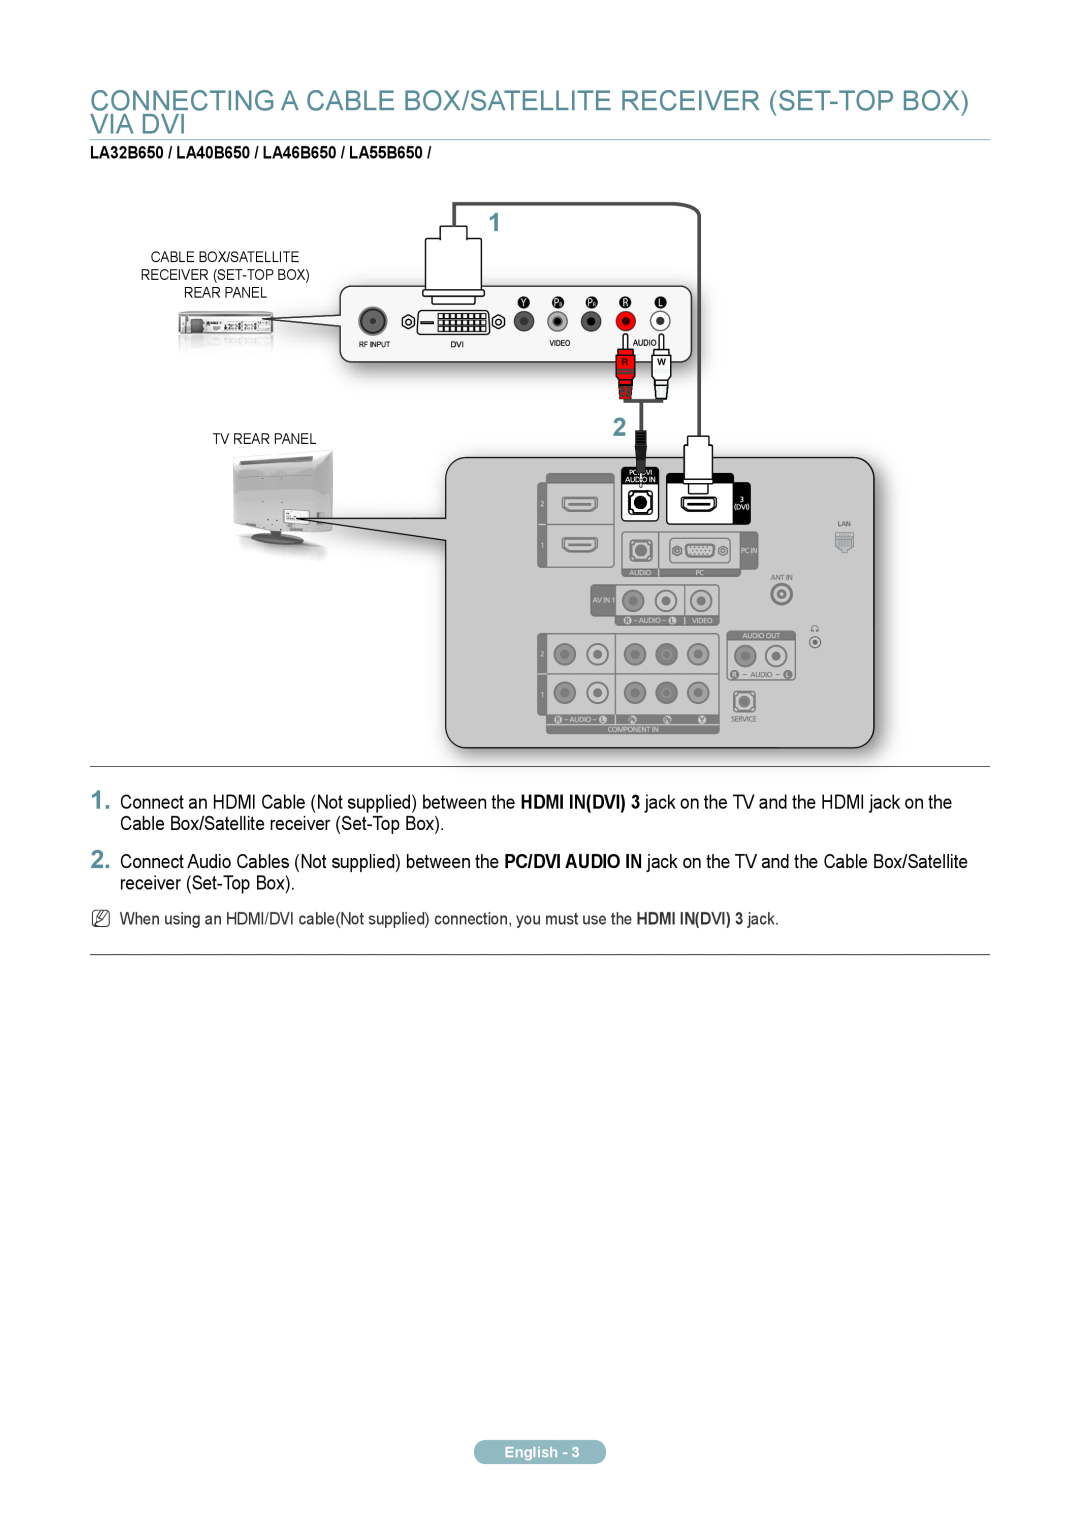 Samsung LA55B650, LA40B650, LA46B650, LA32B650 quick start Connecting A Cable Box/Satellite Receiver Set-Top Box Via Dvi 